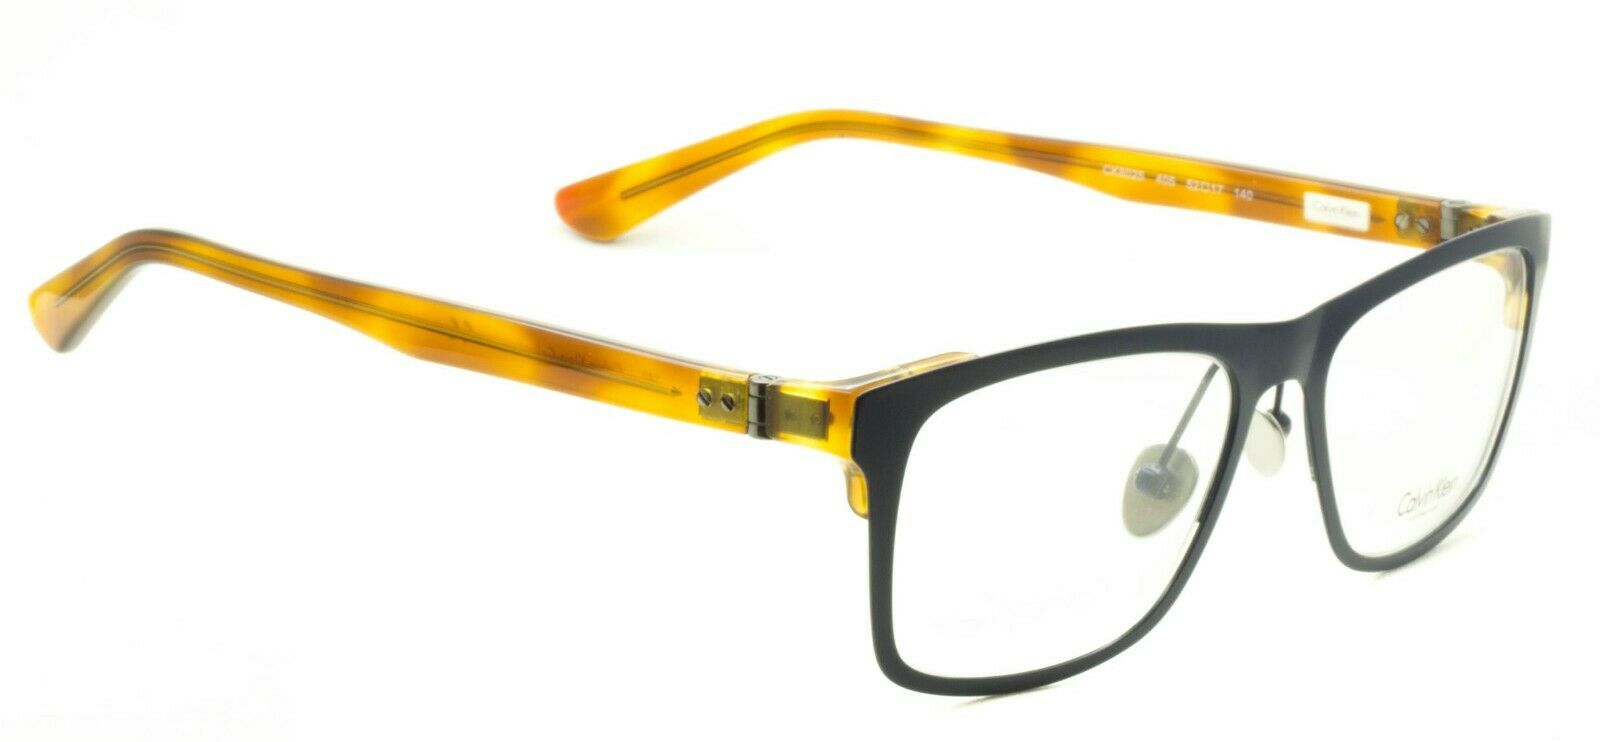 CALVIN KLEIN CK 8025 405 52mm Eyewear RX Optical FRAMES Eyeglasses Glasses - New